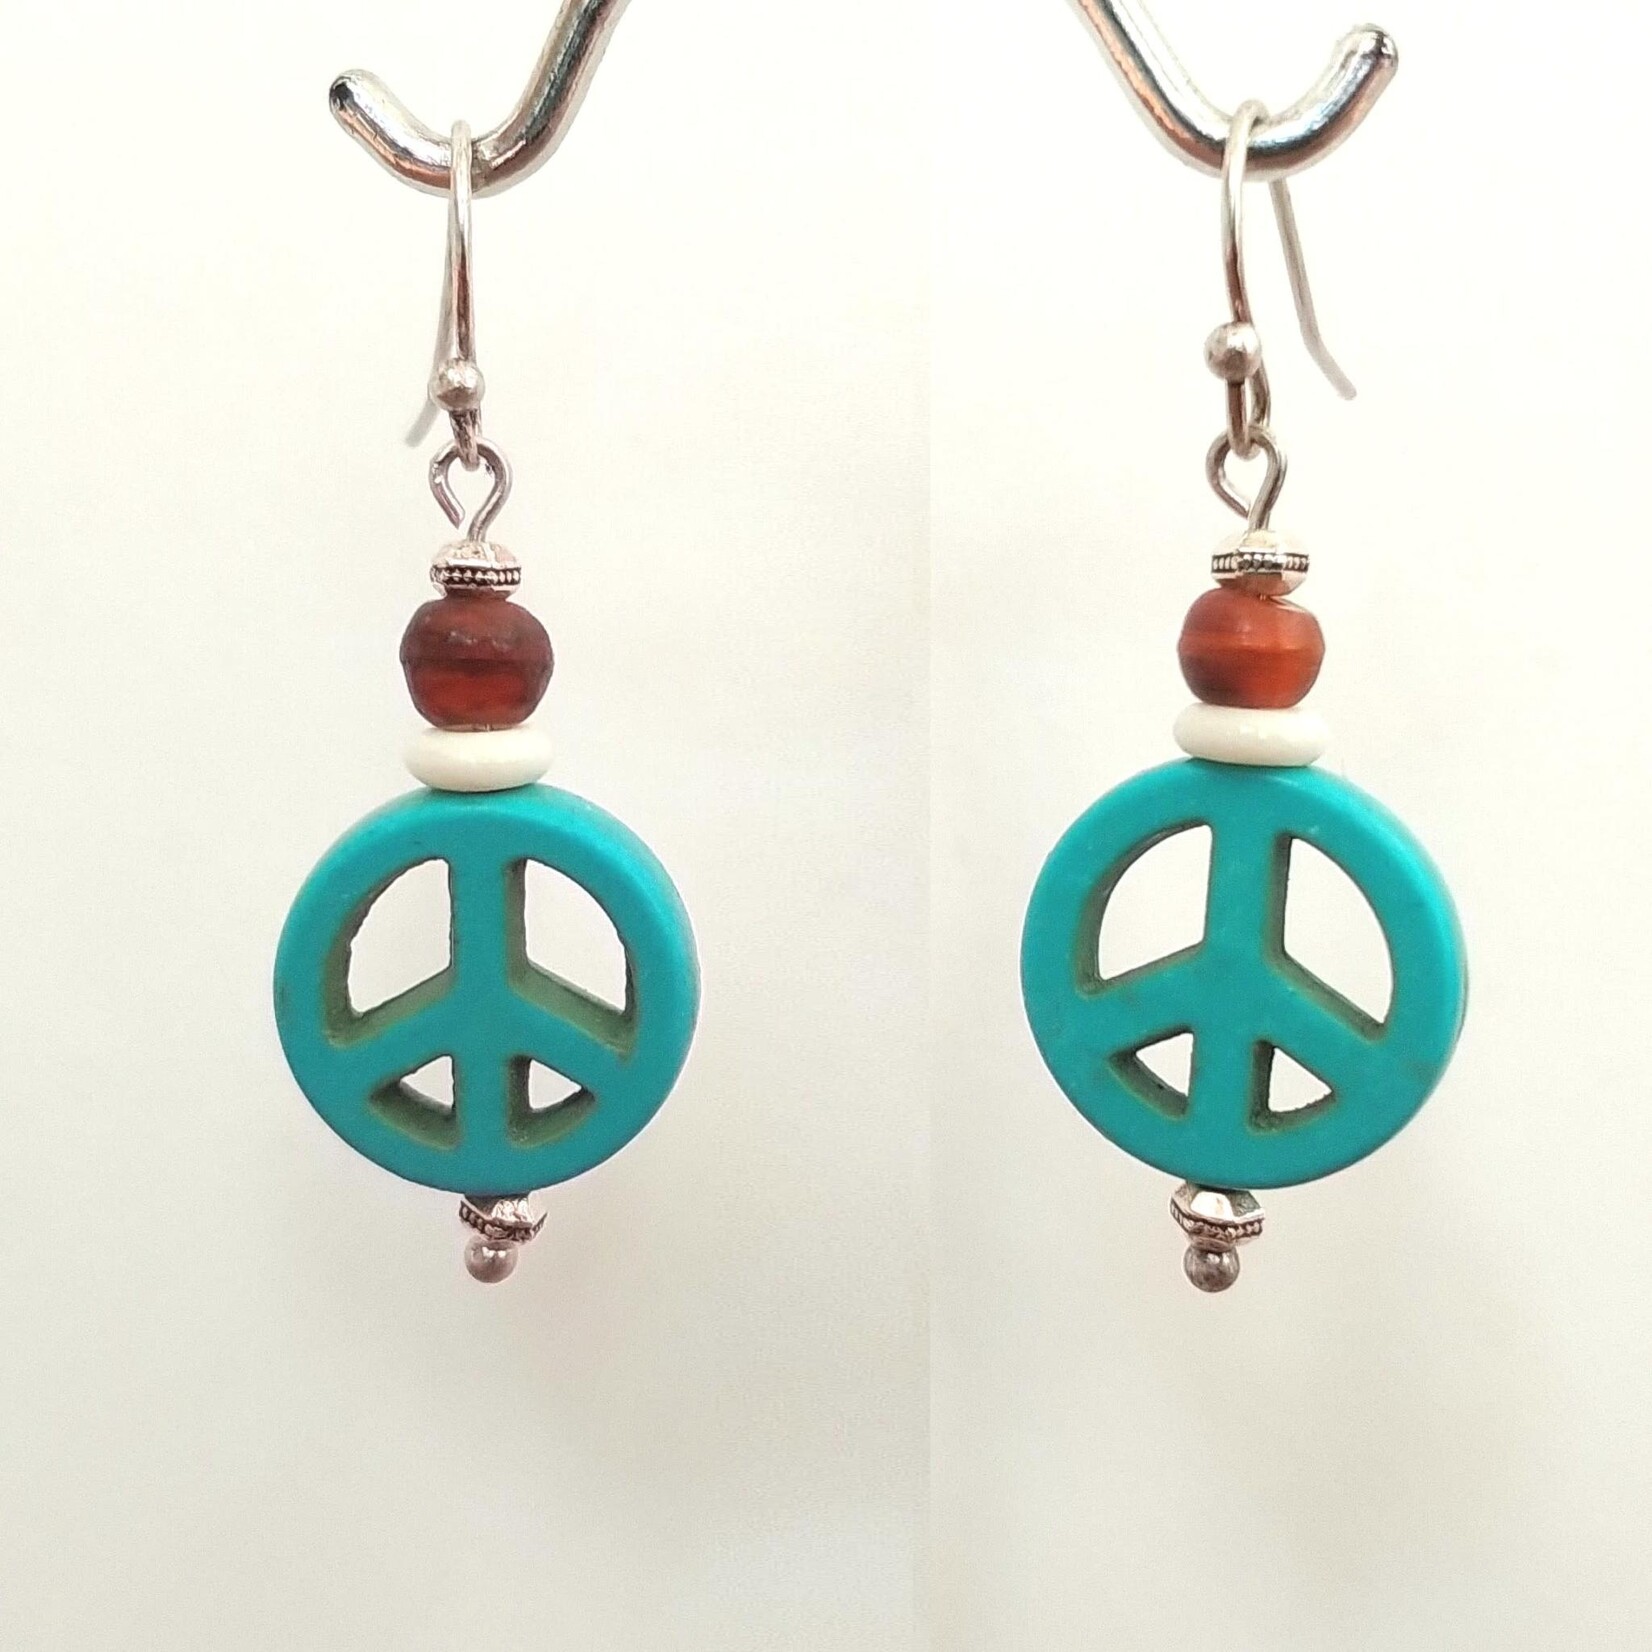 Peace Earring Kit